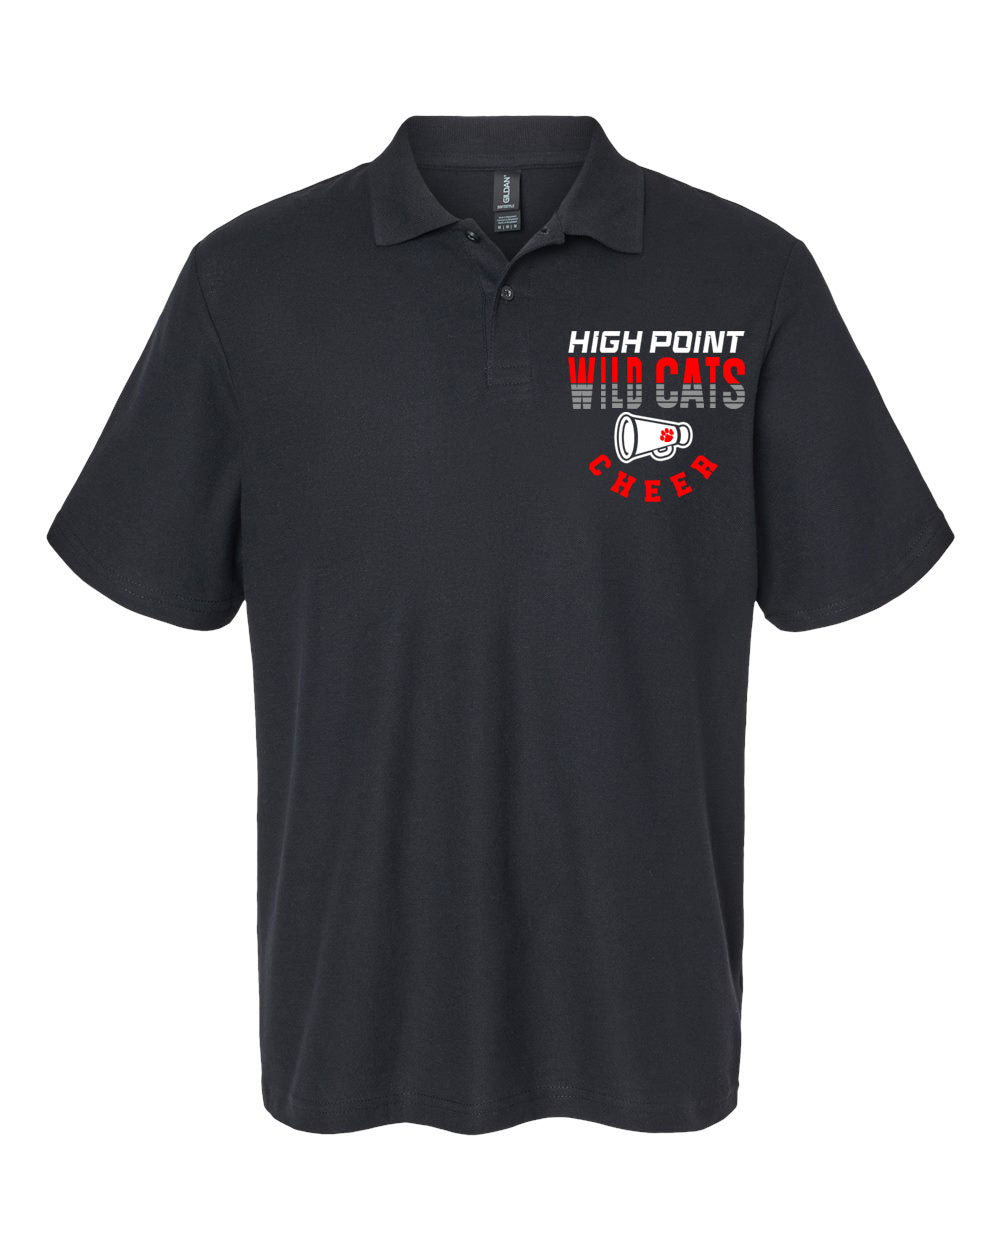 Wildcats Cheer Design 2 Polo T-Shirt